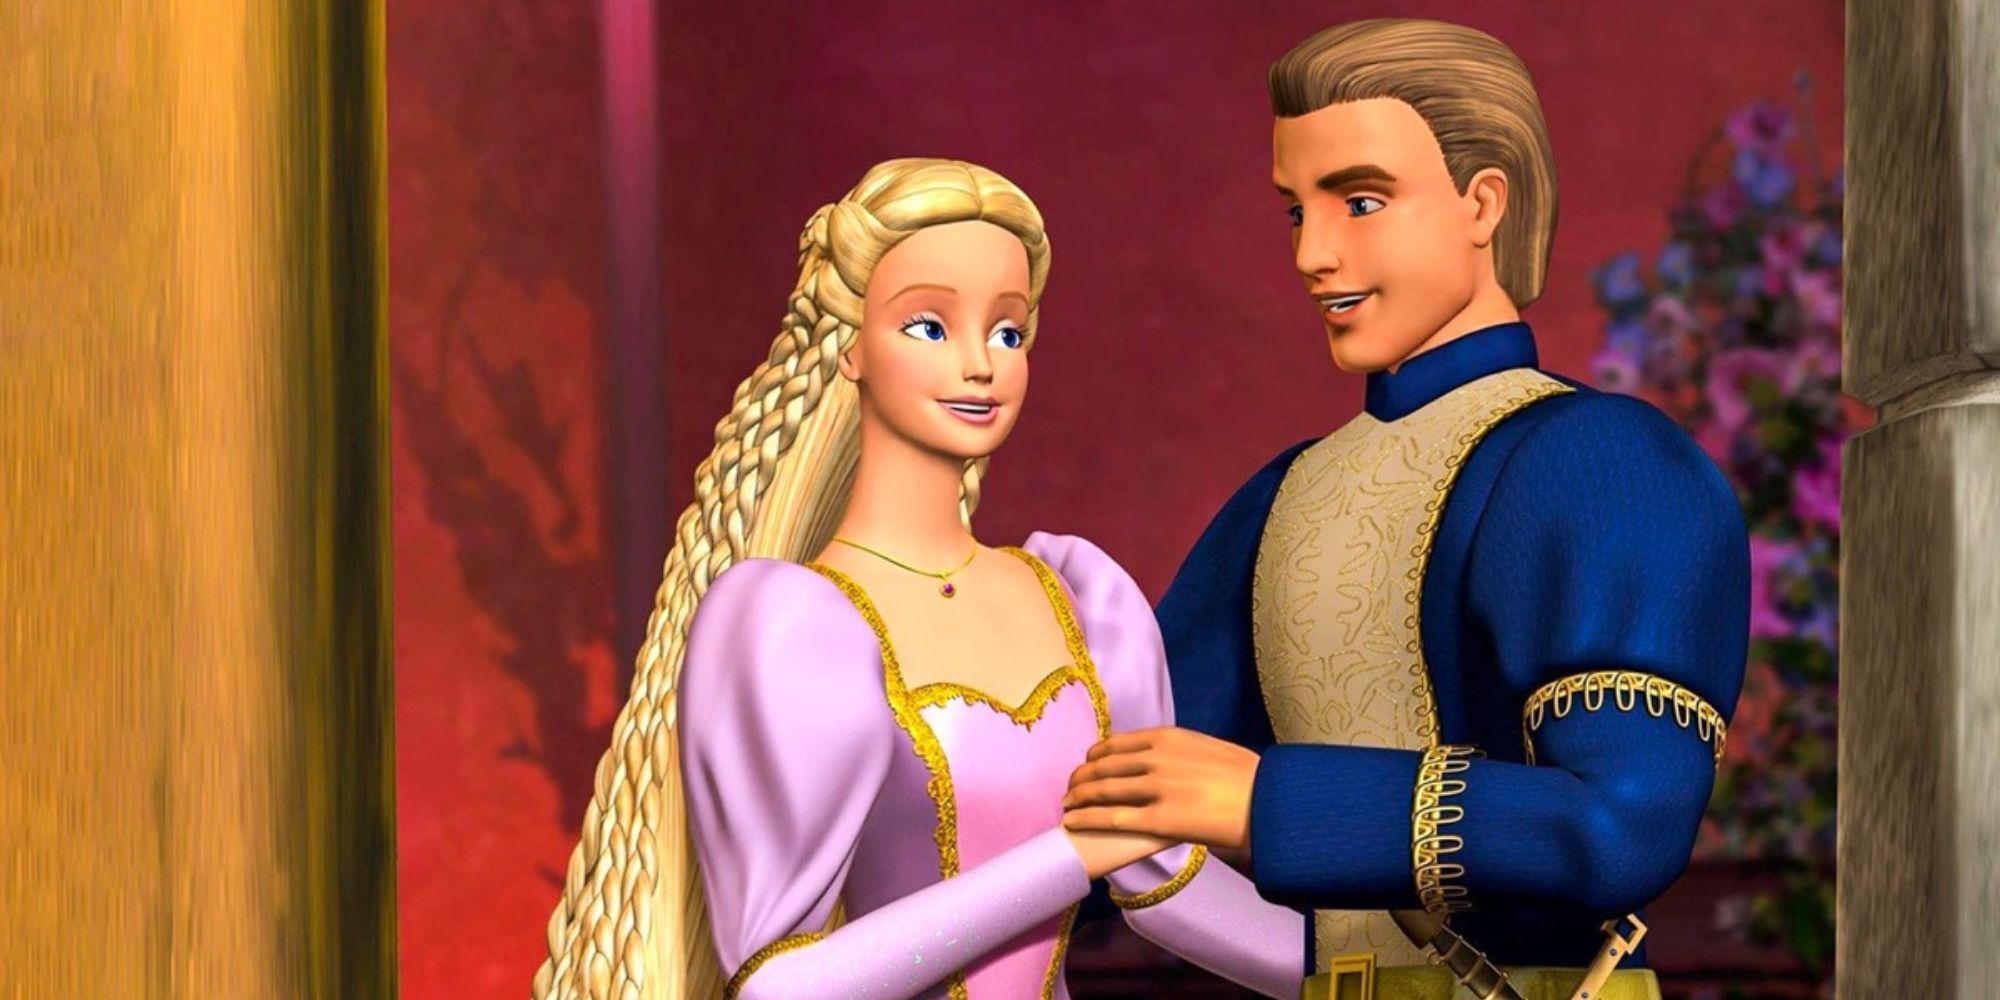 Prince Stefan holding hands with Rapunzel in Barbie as Rapunzel